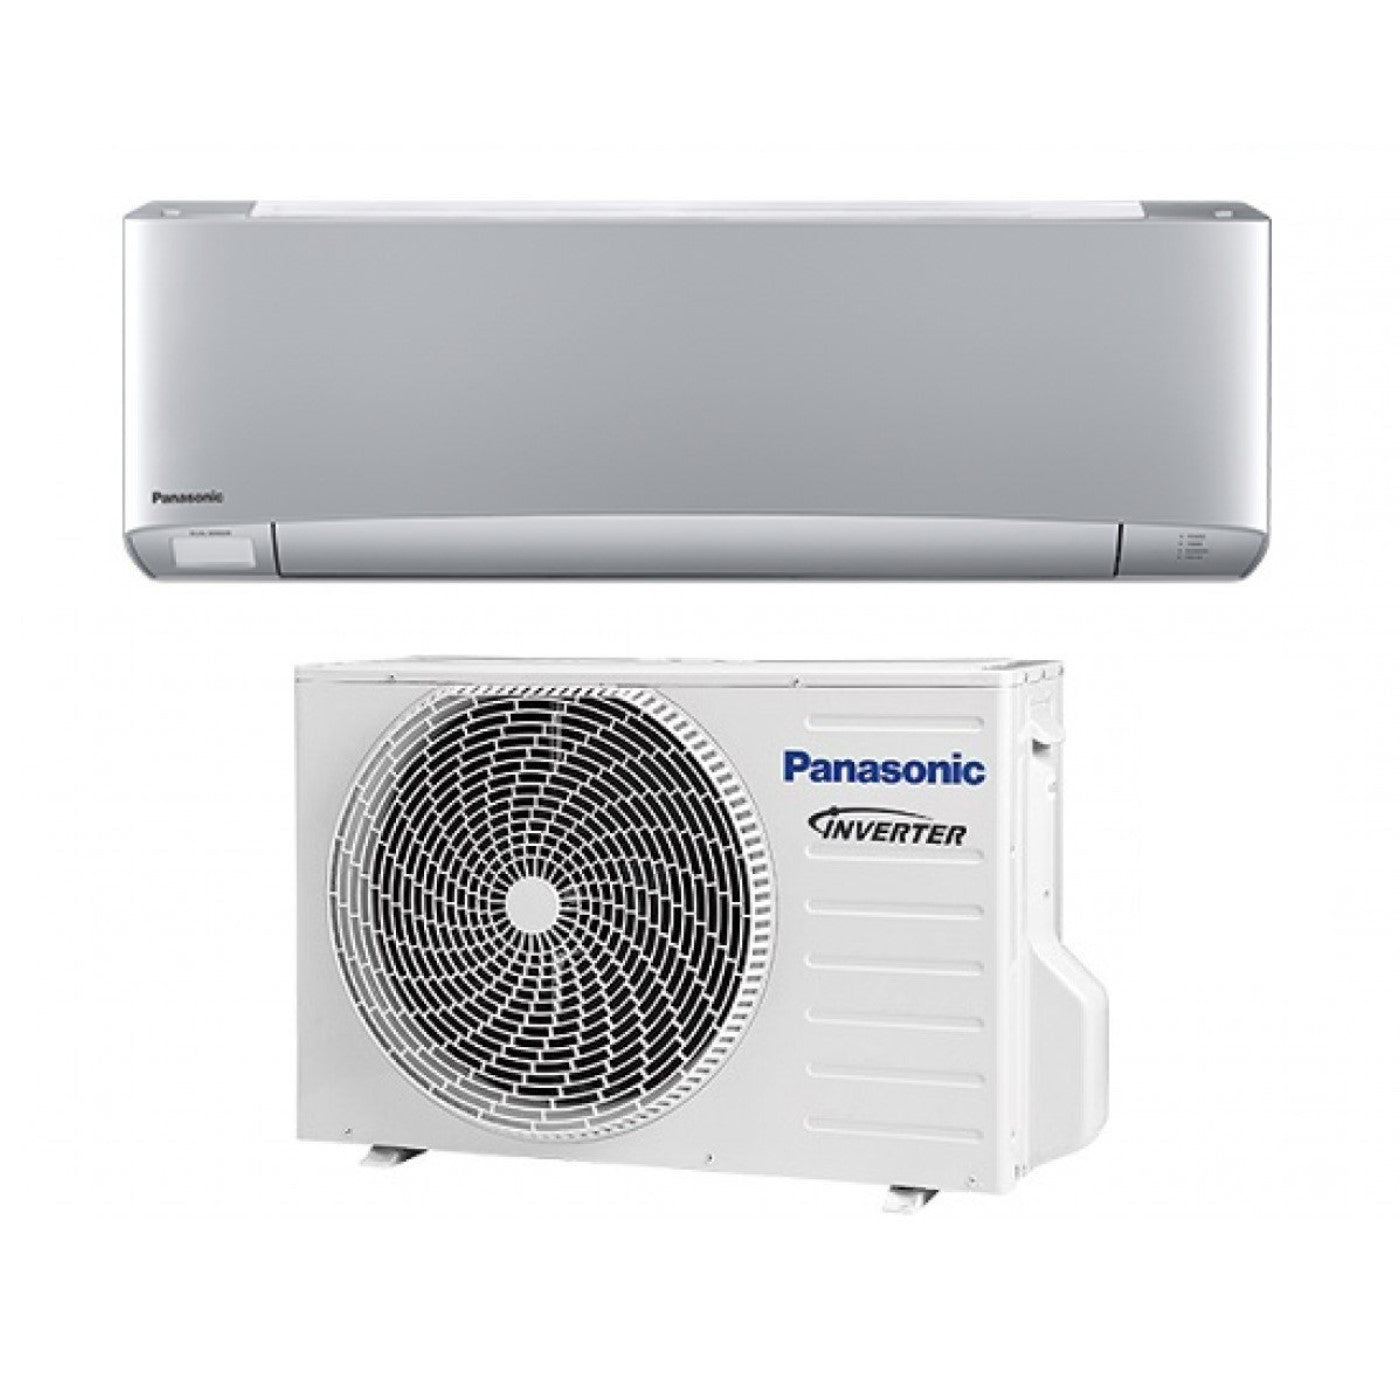 Panasonic Inverter Air Conditioner Etherea Silver Series 7000 Btu 